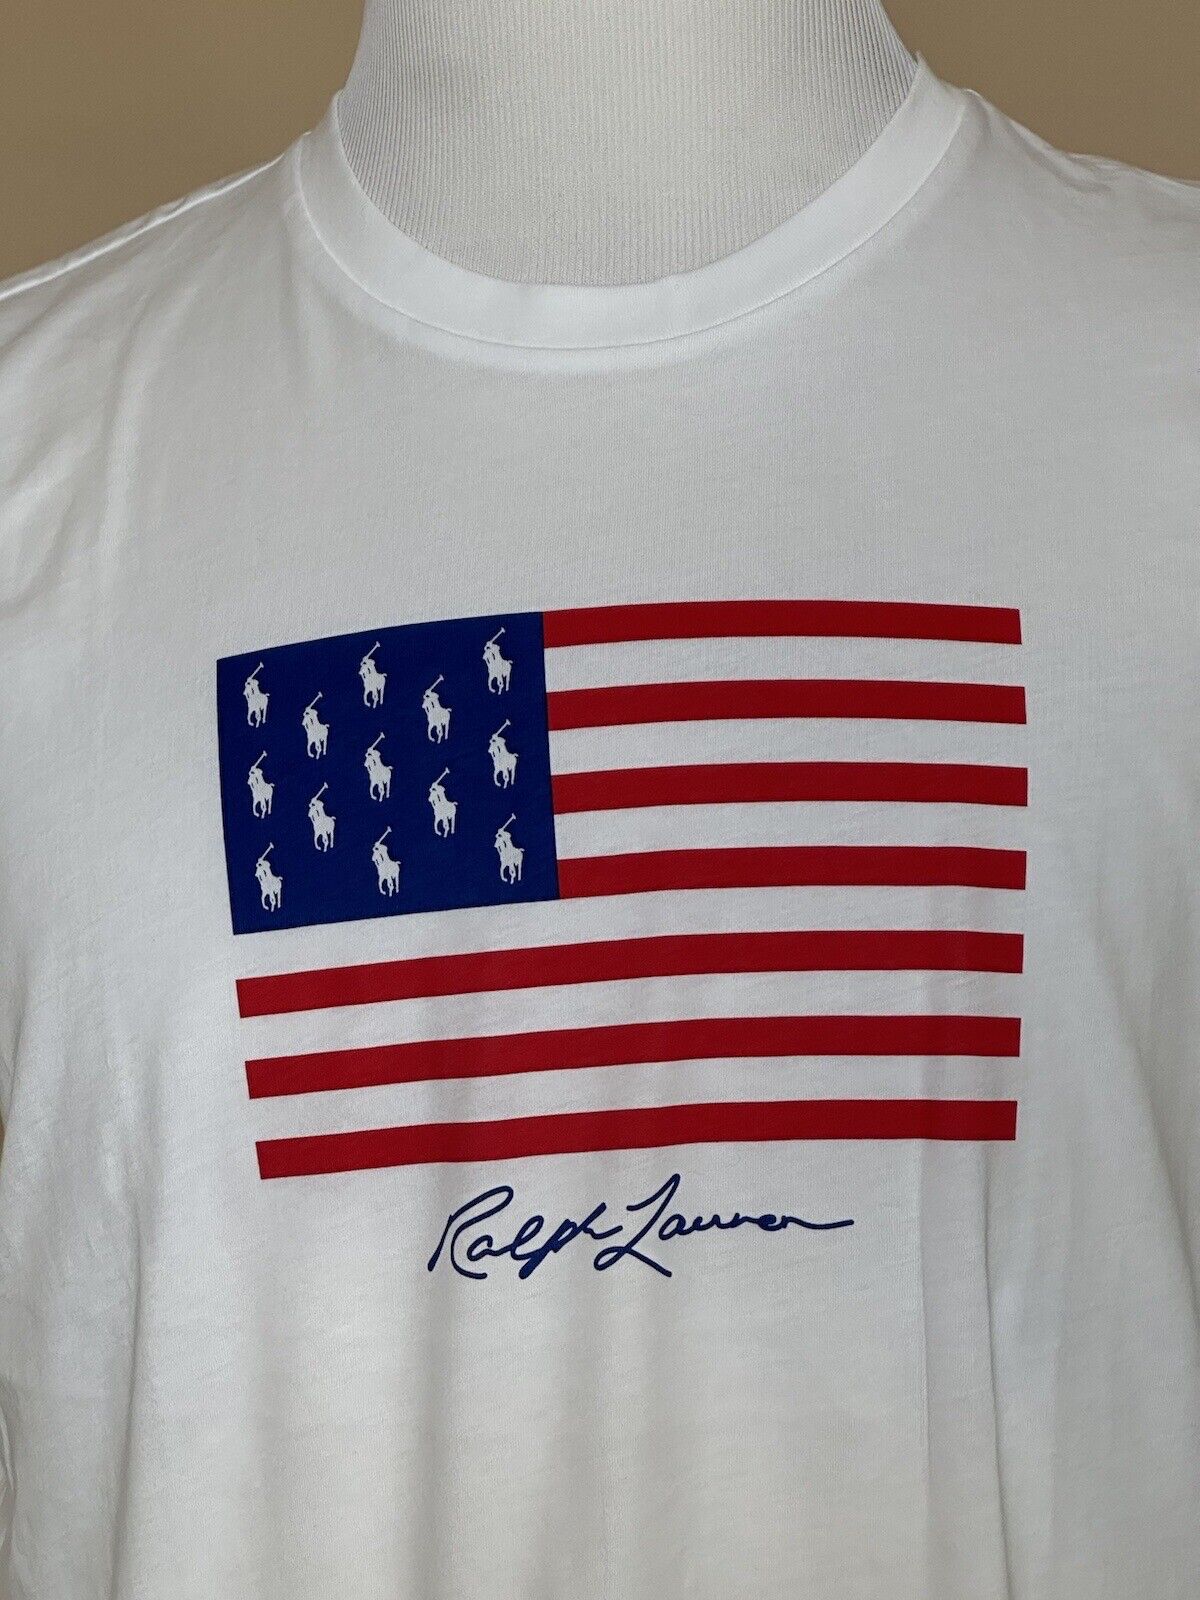 NWT $78 Polo Ralph Lauren Флаг США Белая футболка с короткими рукавами Топ Маленький